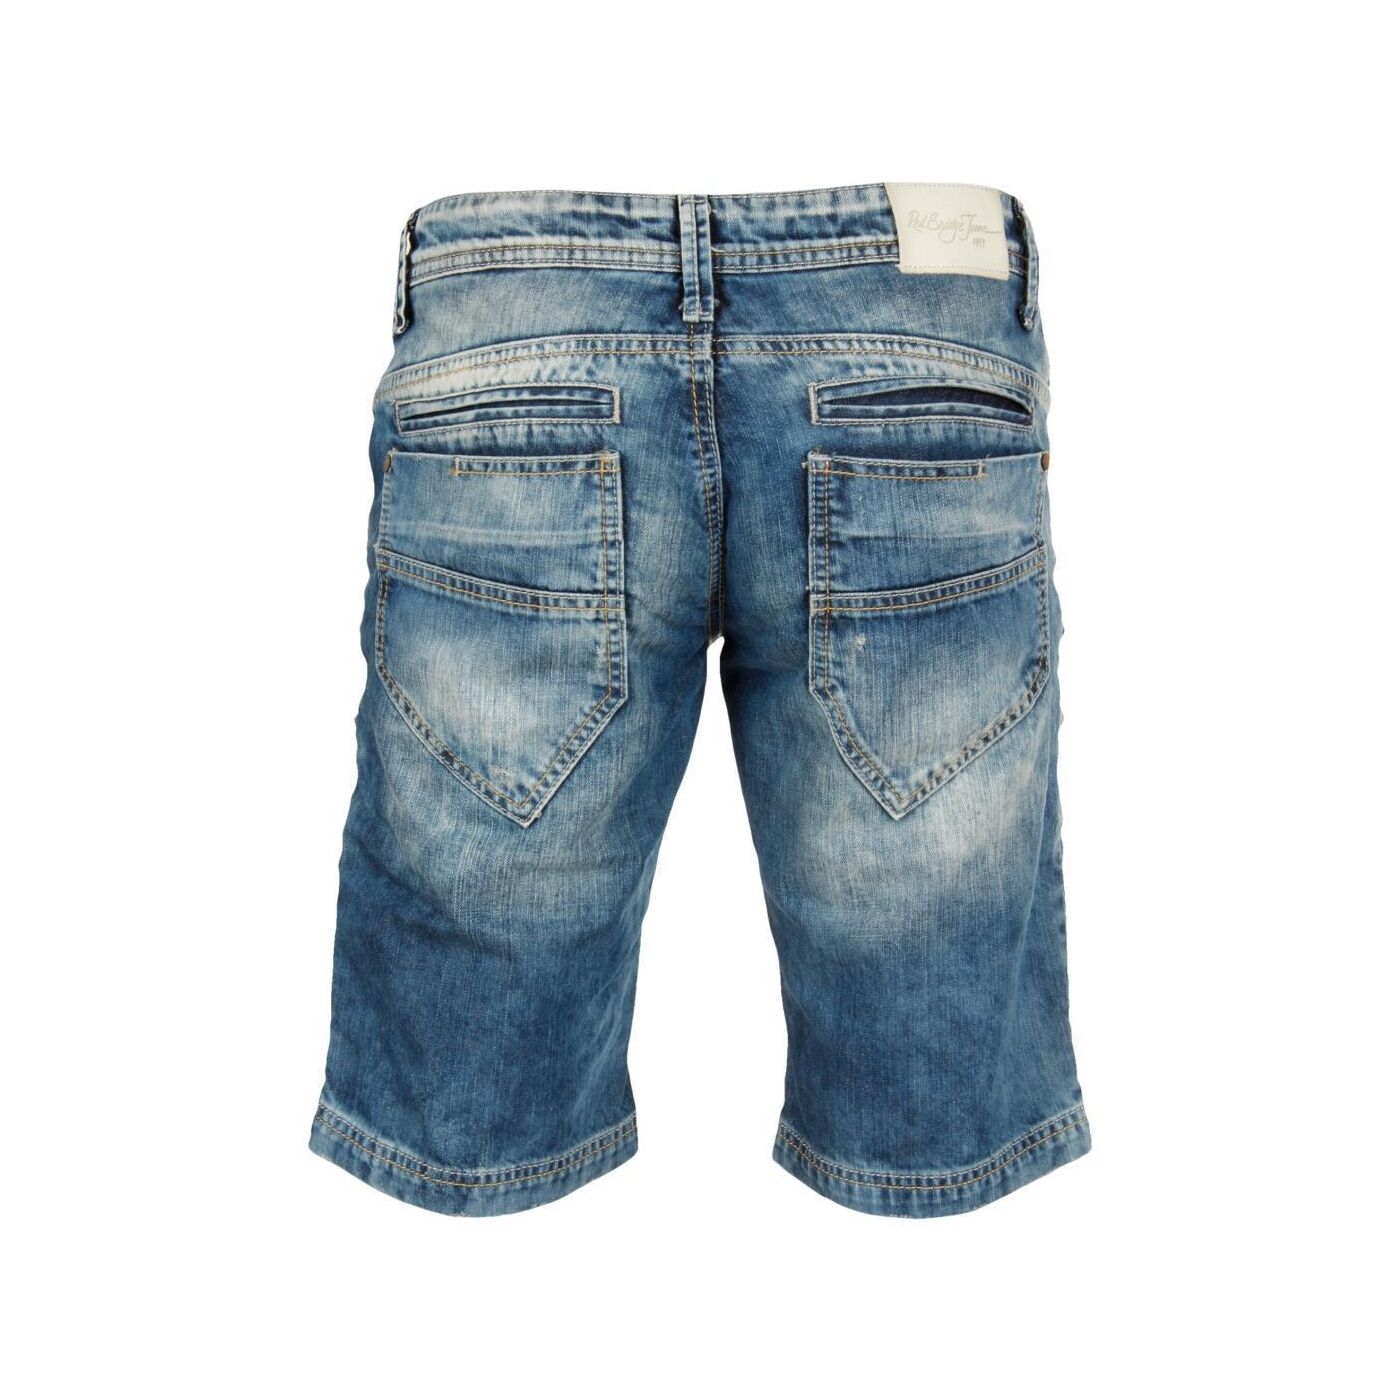 Keep Jeans Red € Bridge blue-R-31151-denim pant 29,90 Redbr, Shorts - Back Men